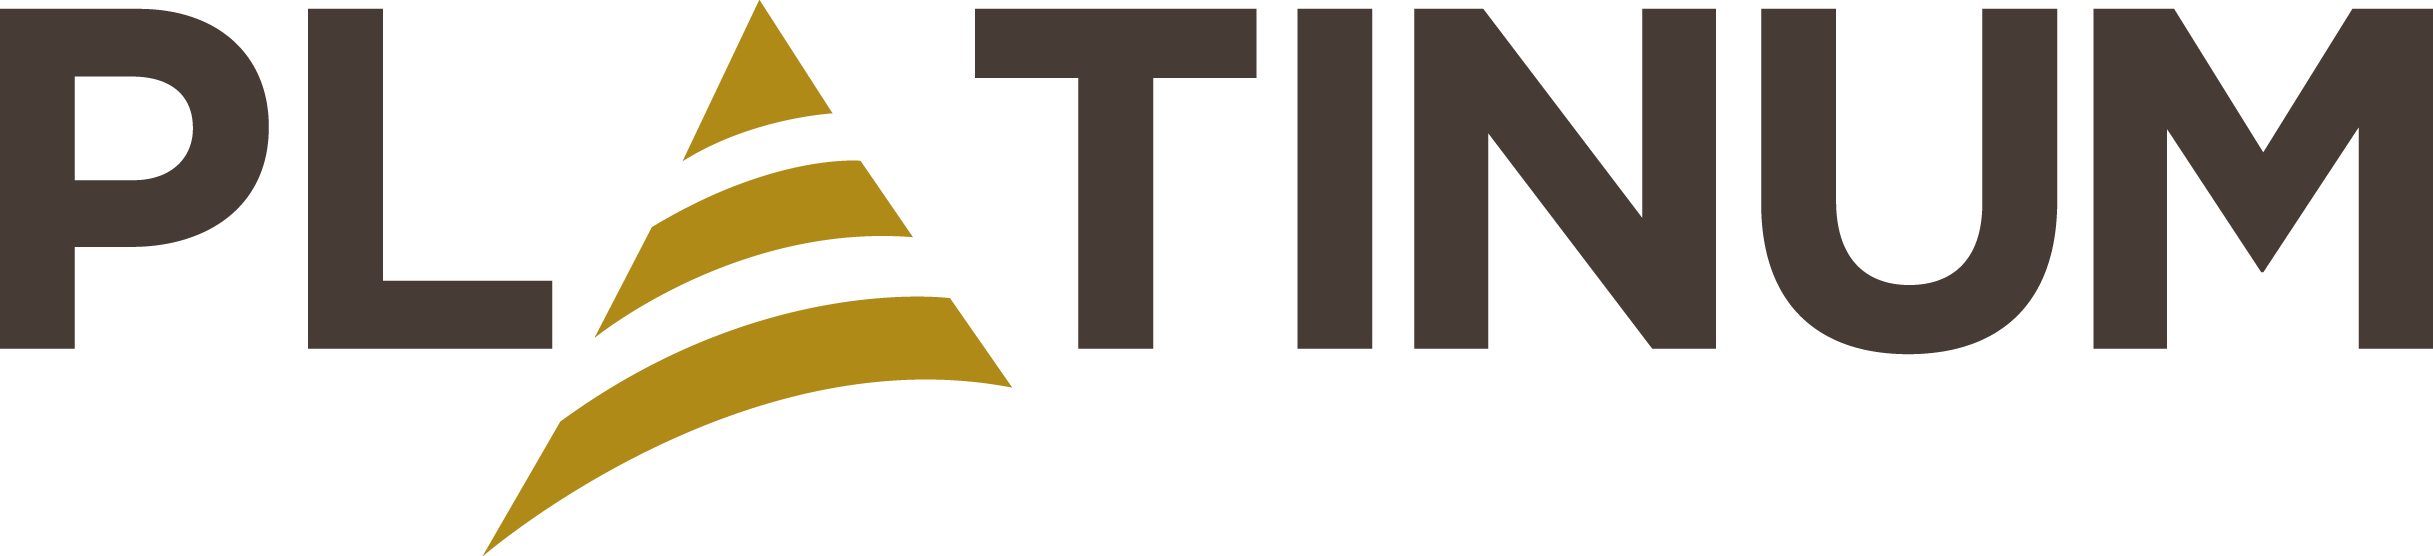 Platinum Logo - NWIBRT